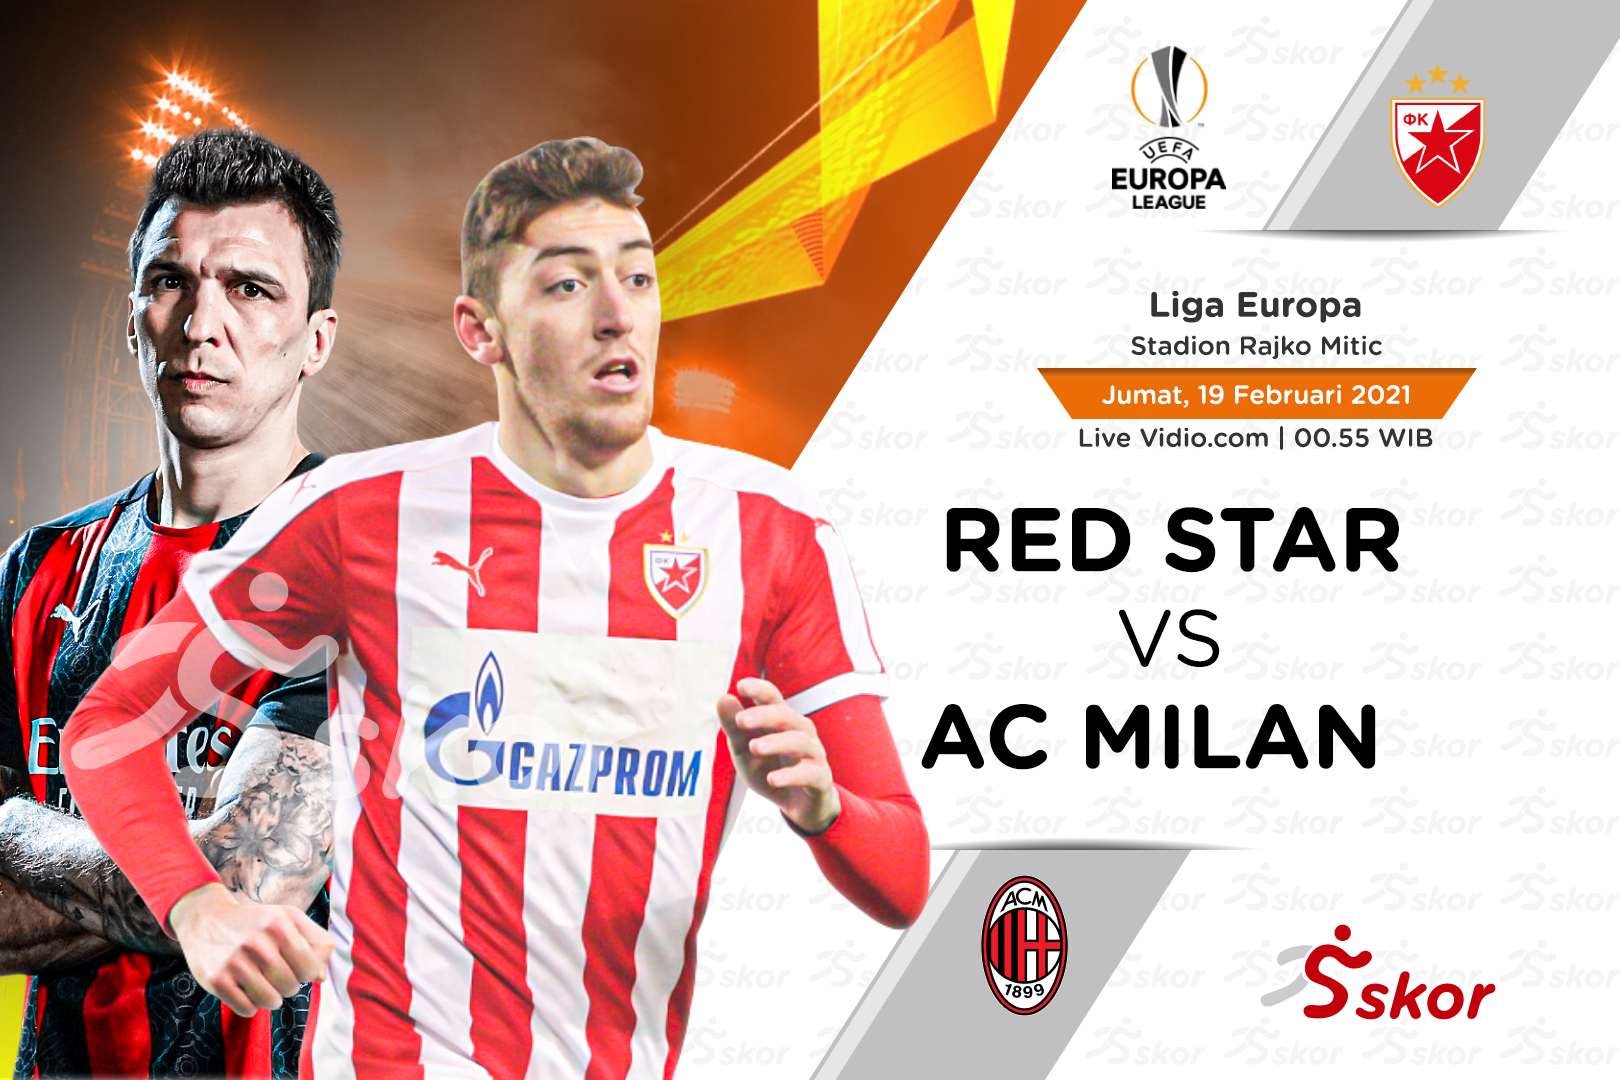 Prediksi Red Star vs AC Milan: Saatnya Mario Mandzukic Unjuk Gigi